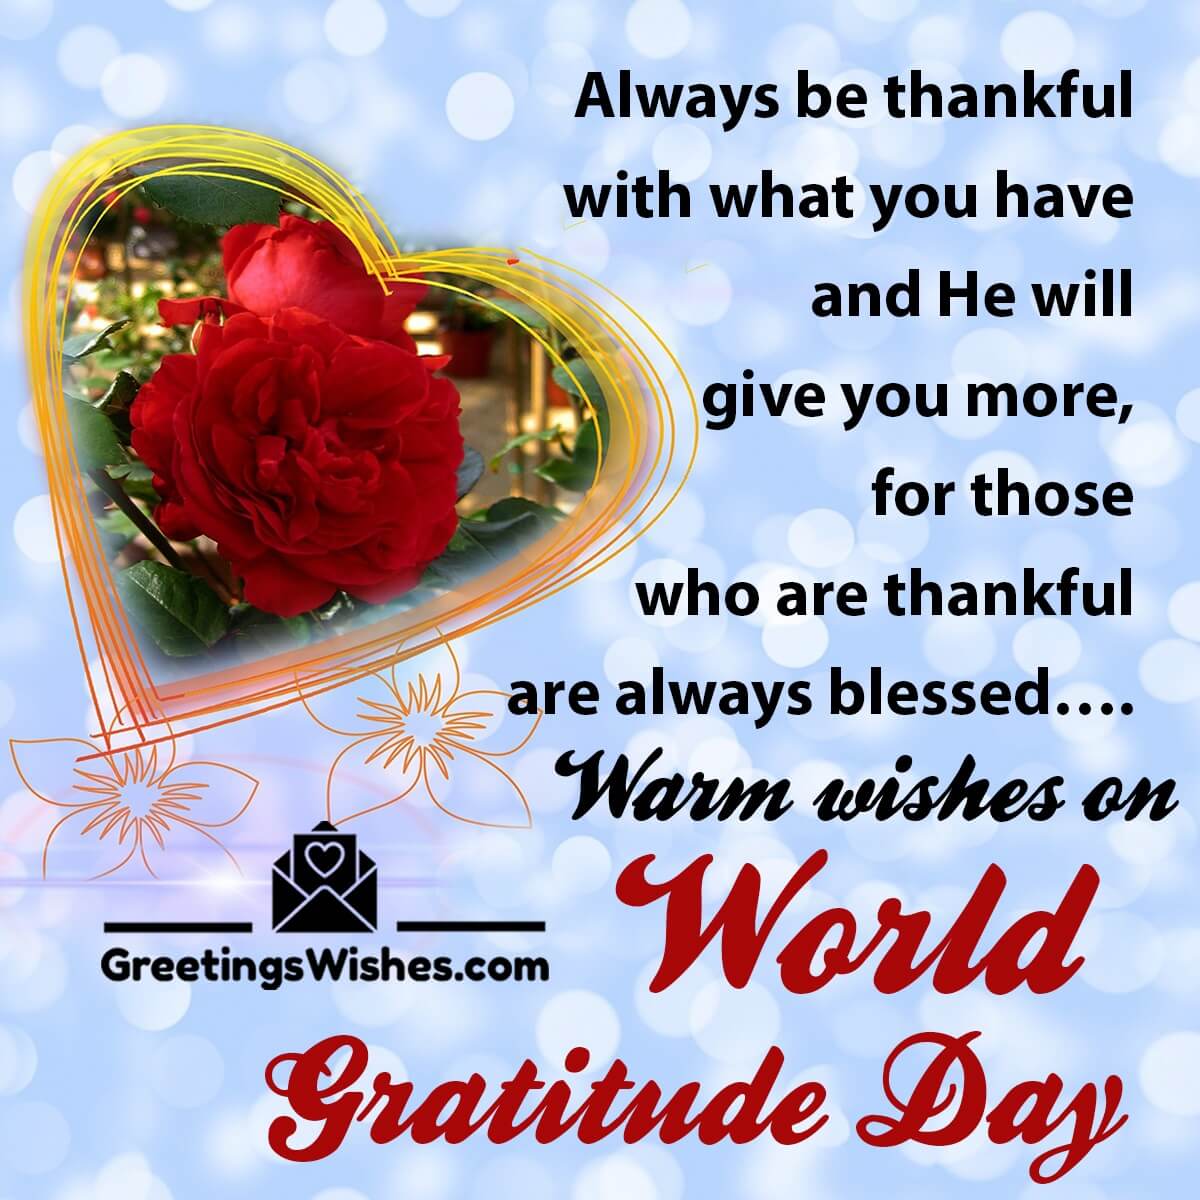 World Gratitude Day Wishes